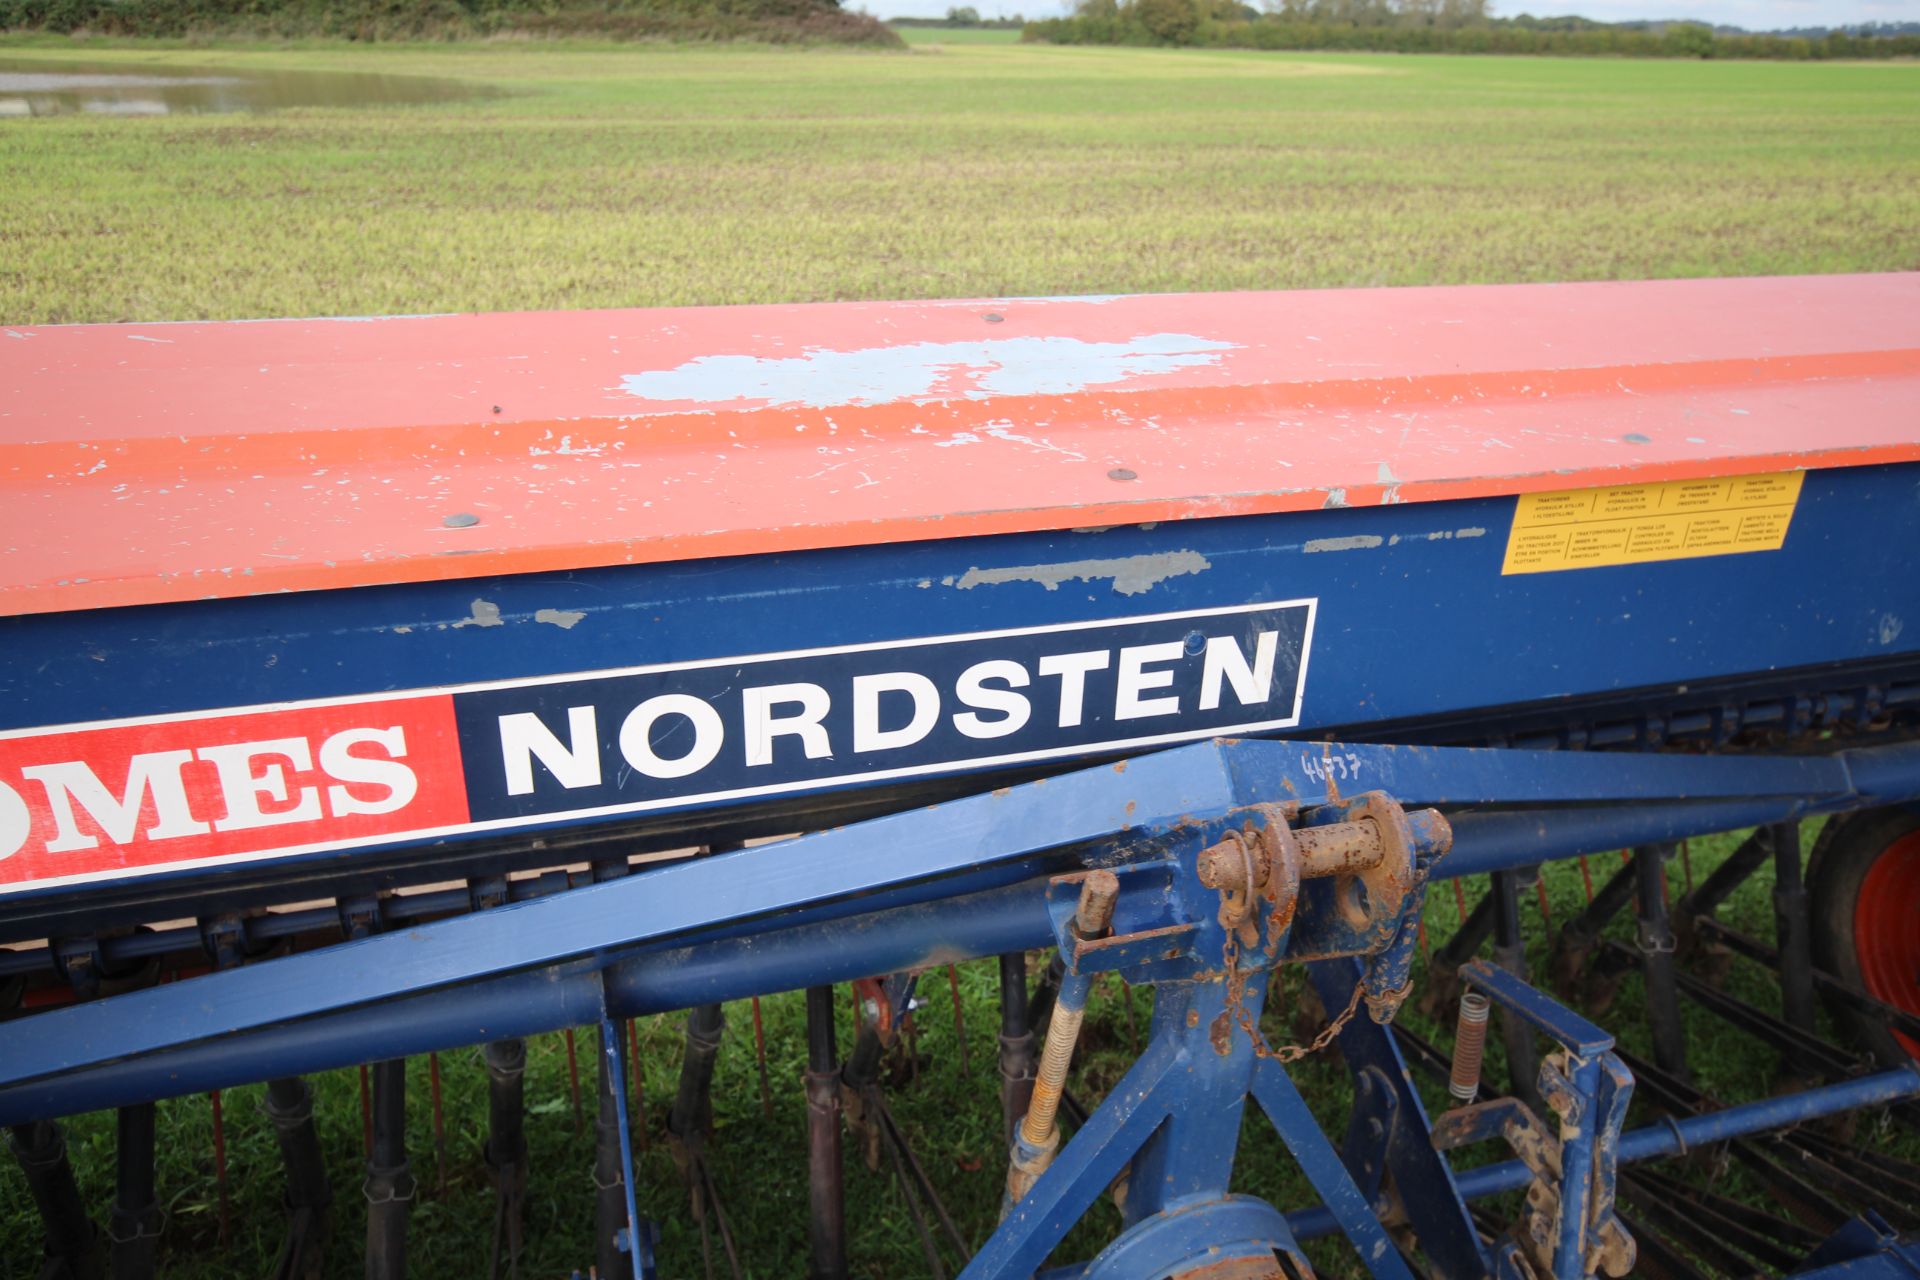 Nordsten 3m mounted drill. V. Manual held - Image 12 of 29